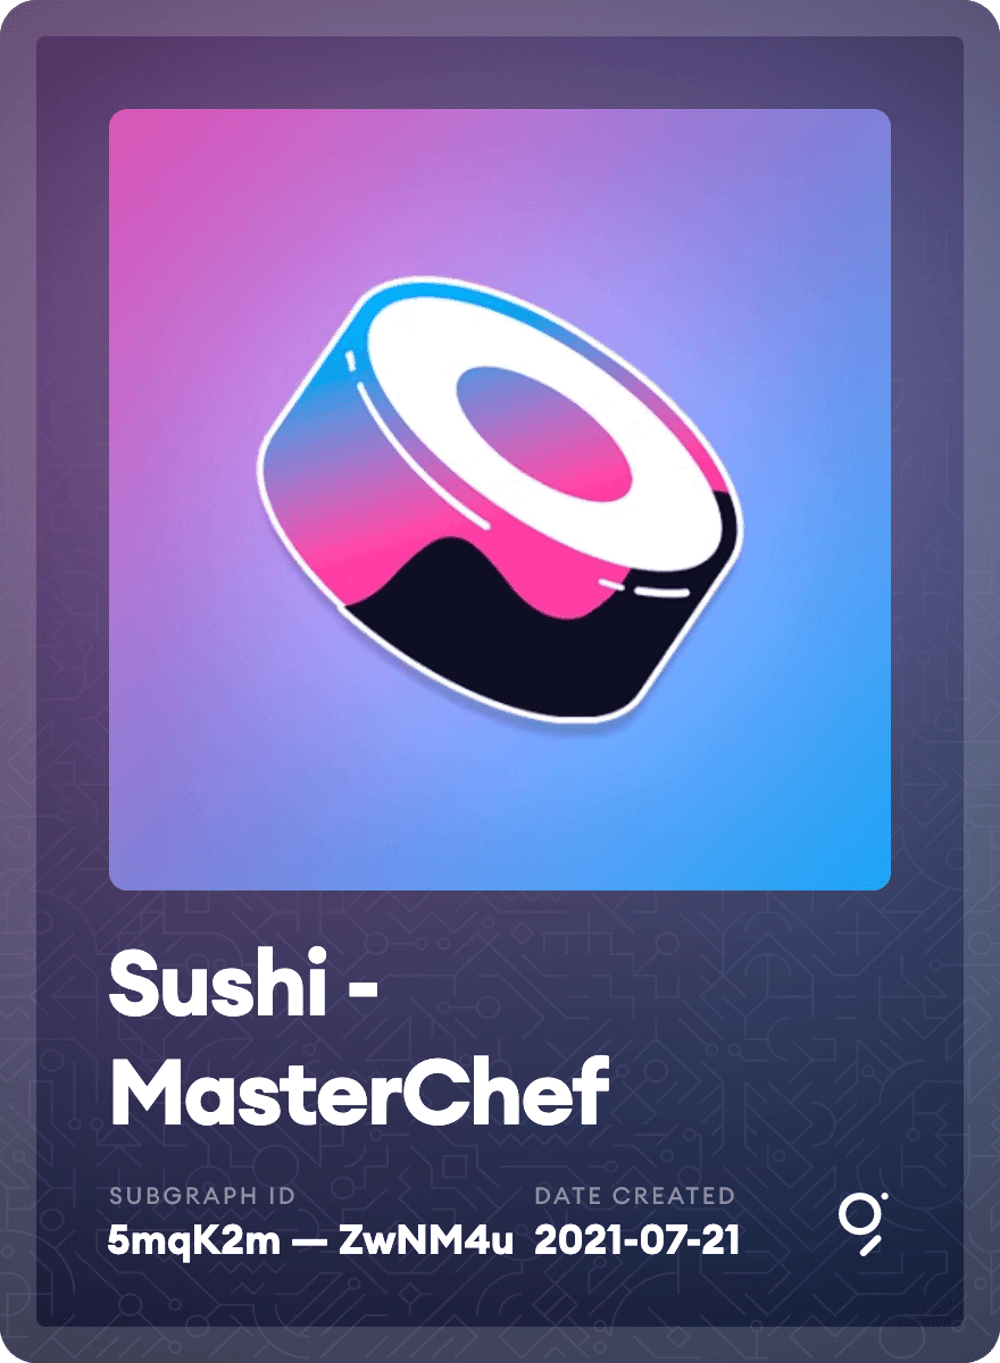 Sushi - MasterChef Subgraph